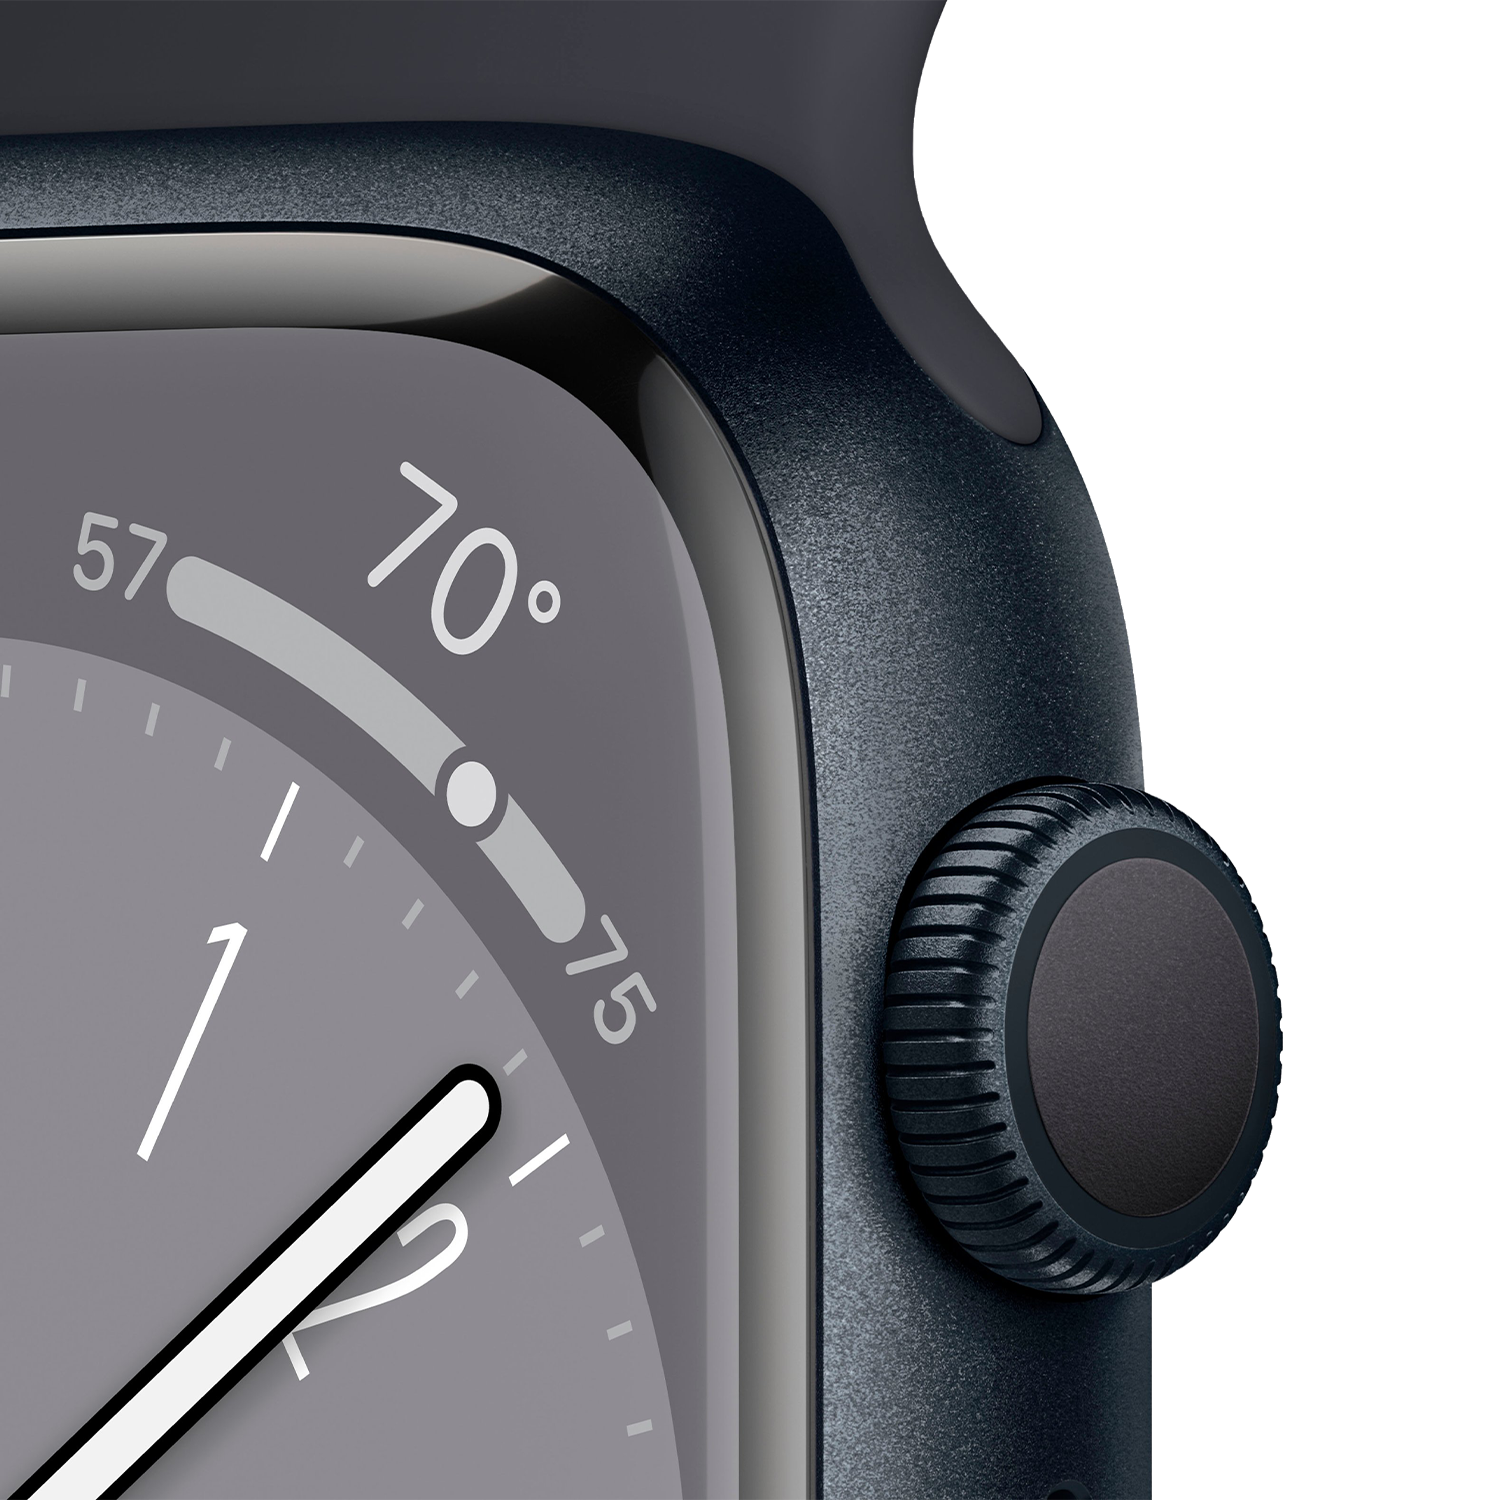 Apple Watch Series 8 MNU83LL/A Caixa Alumínio 41mm Meia Noite - Esportiva Meia Noite